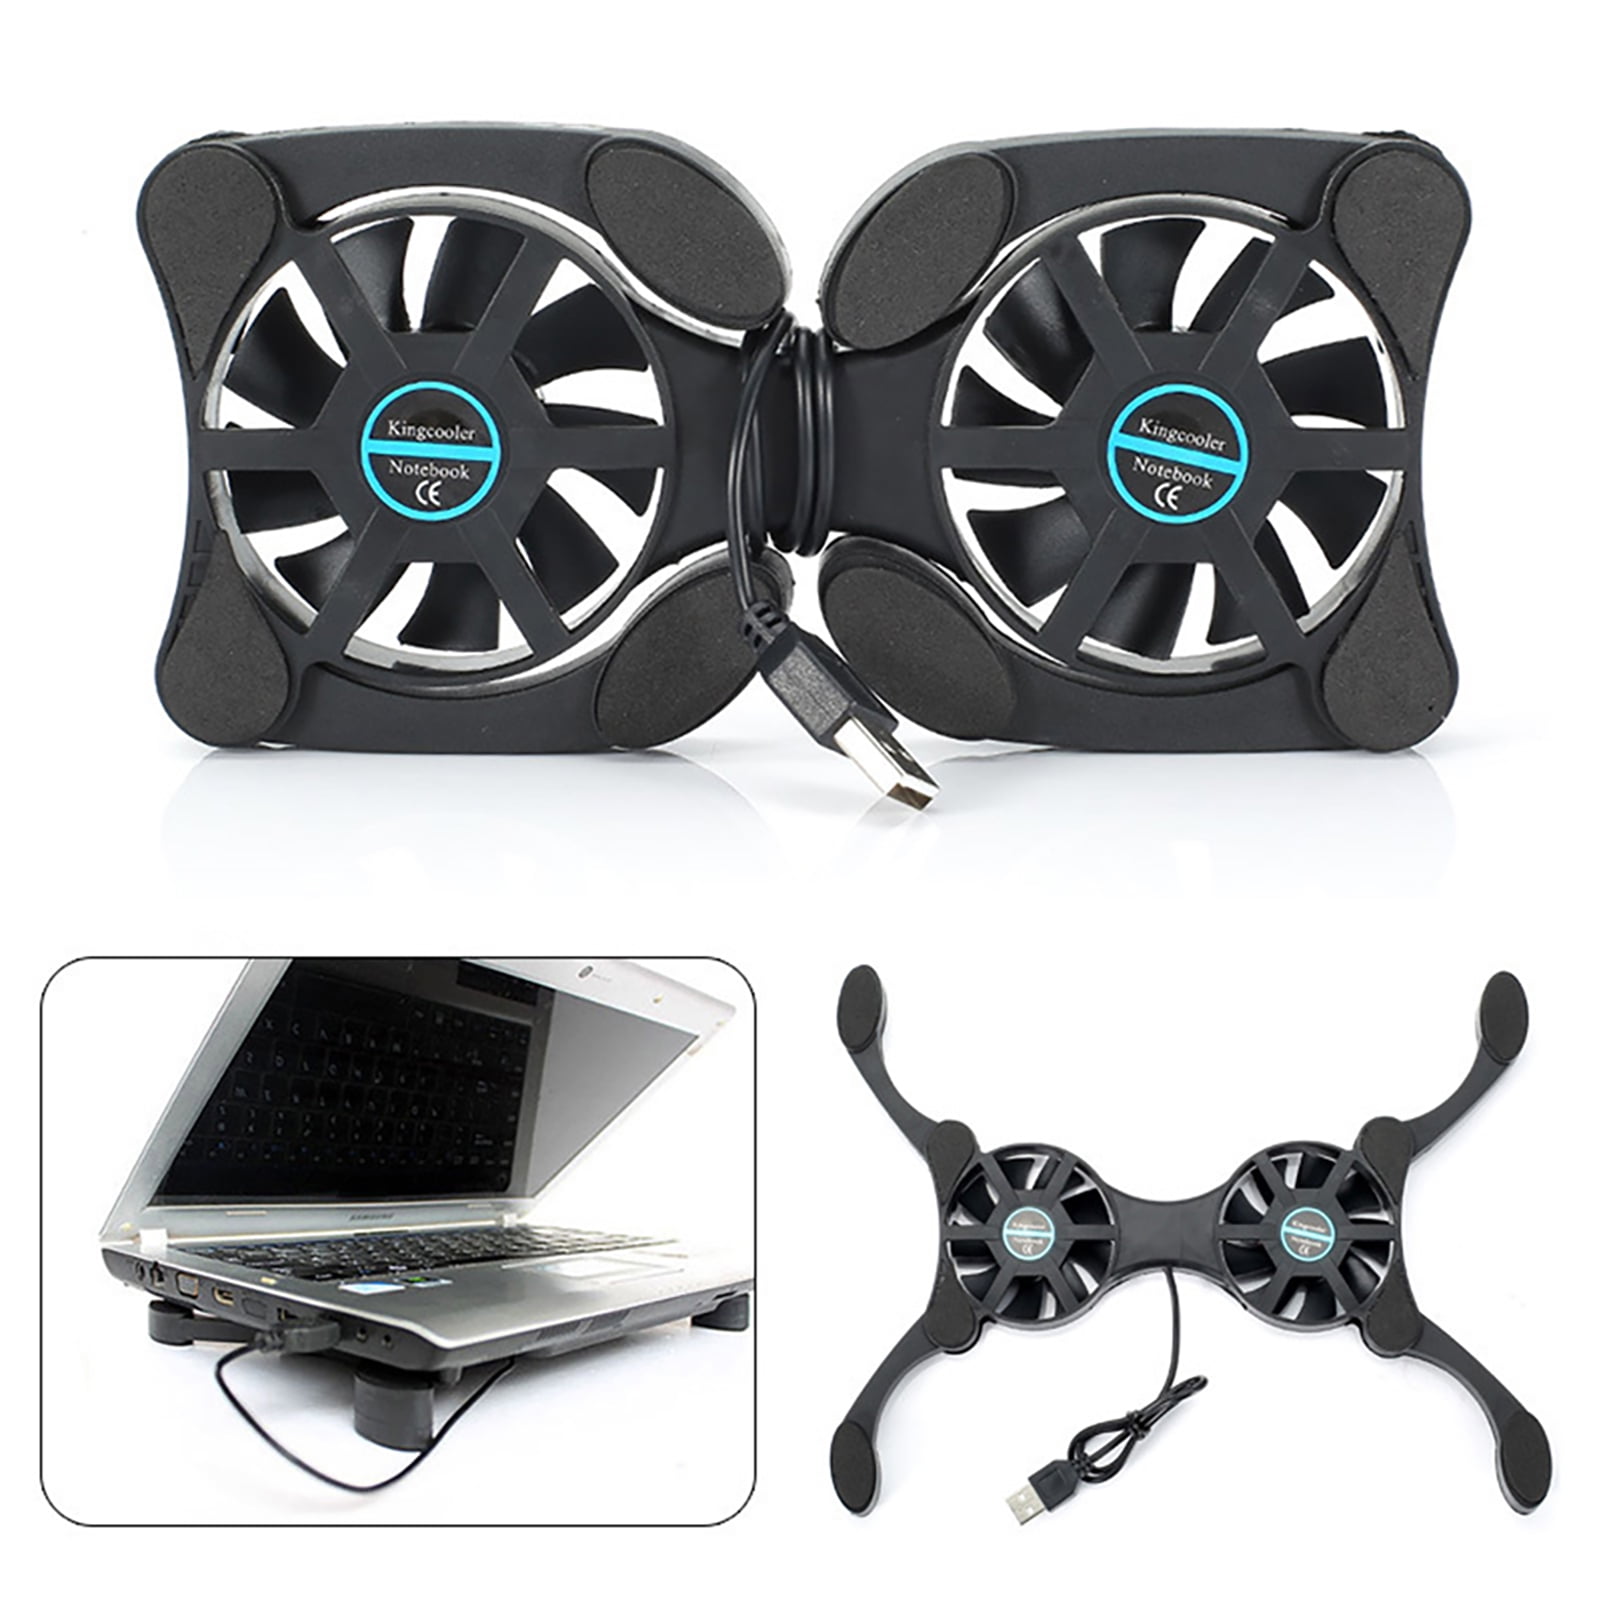 Laptop mini octopus usb cooling notebook 2 fans cooler pad foldable fan 10"W`US 